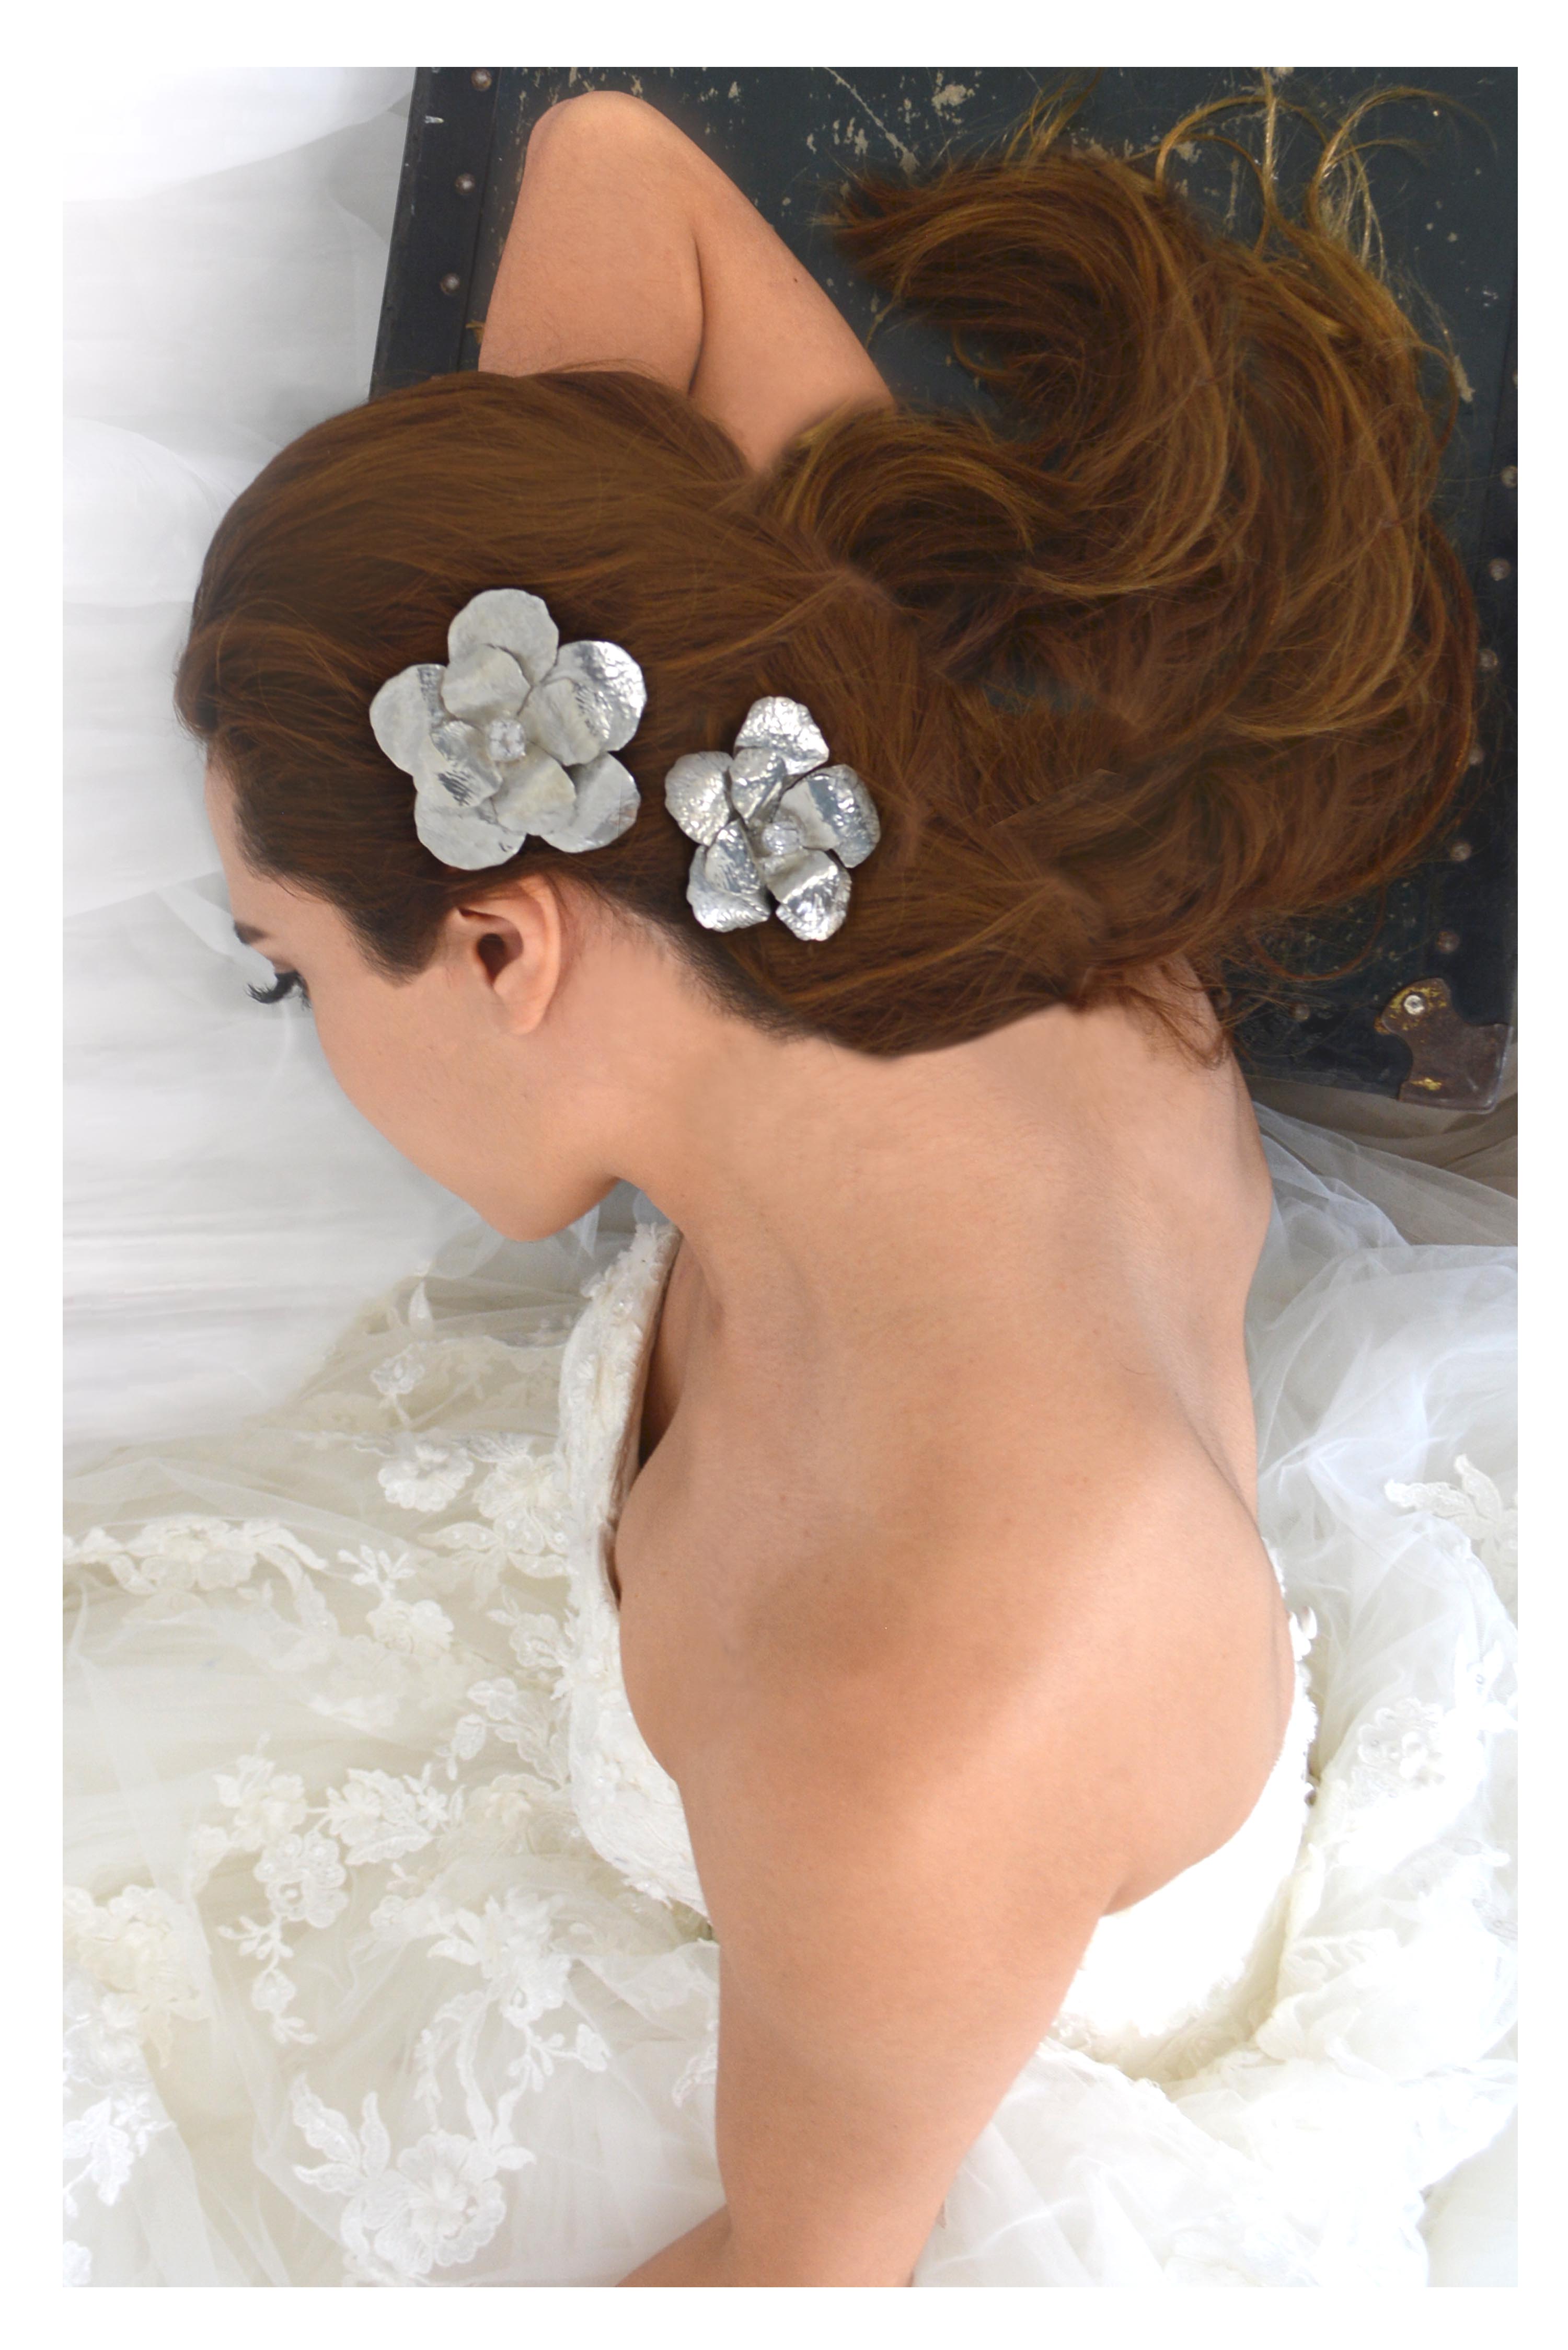 austin tx bridal shops - custom wedding dresses - bridal gowns - 280